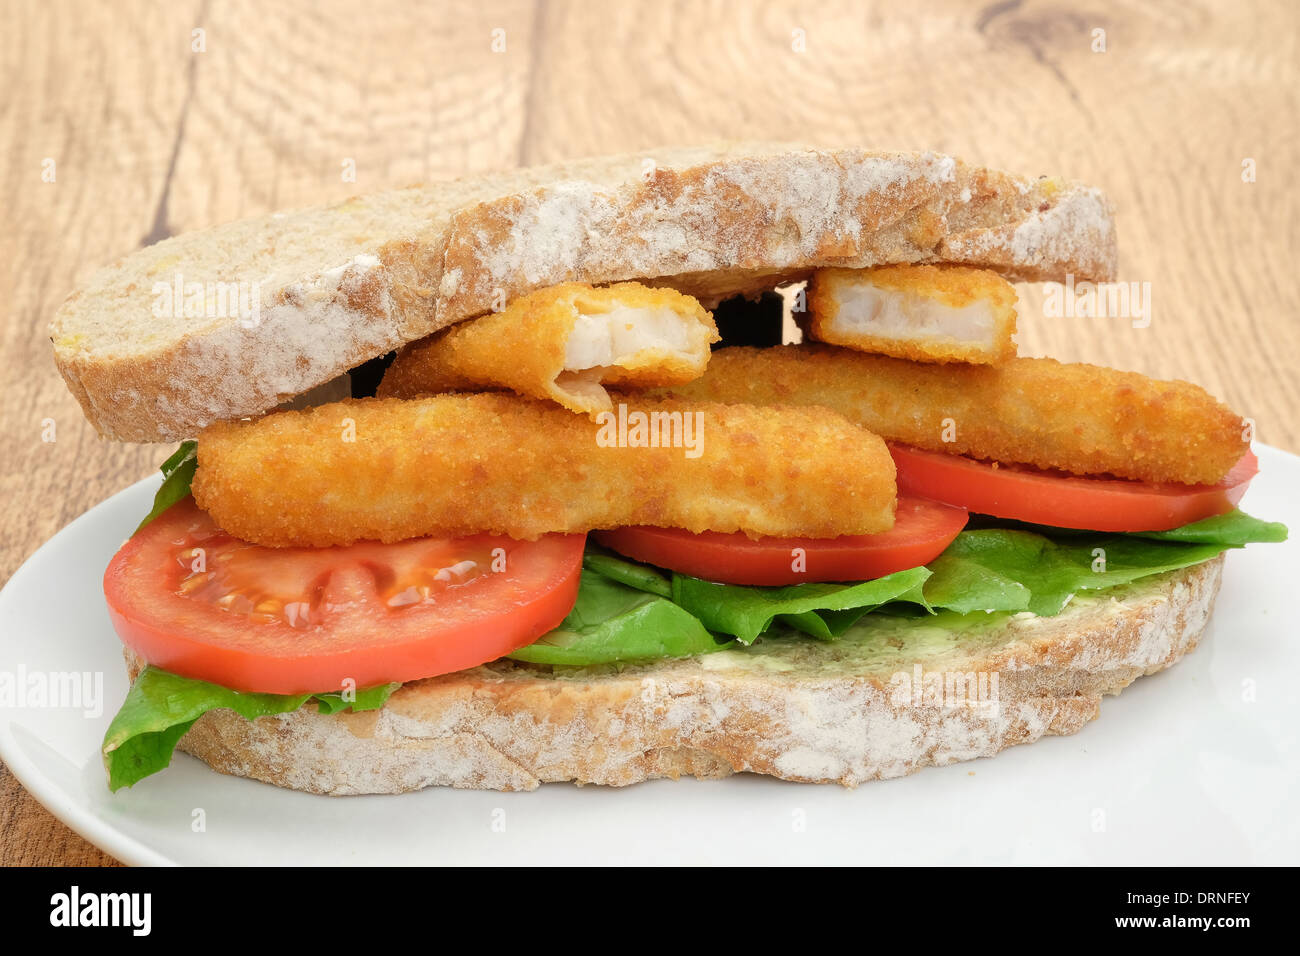 Tasty fish finger stick sandwich with tomato and lettuce - studio shot Stock Photo